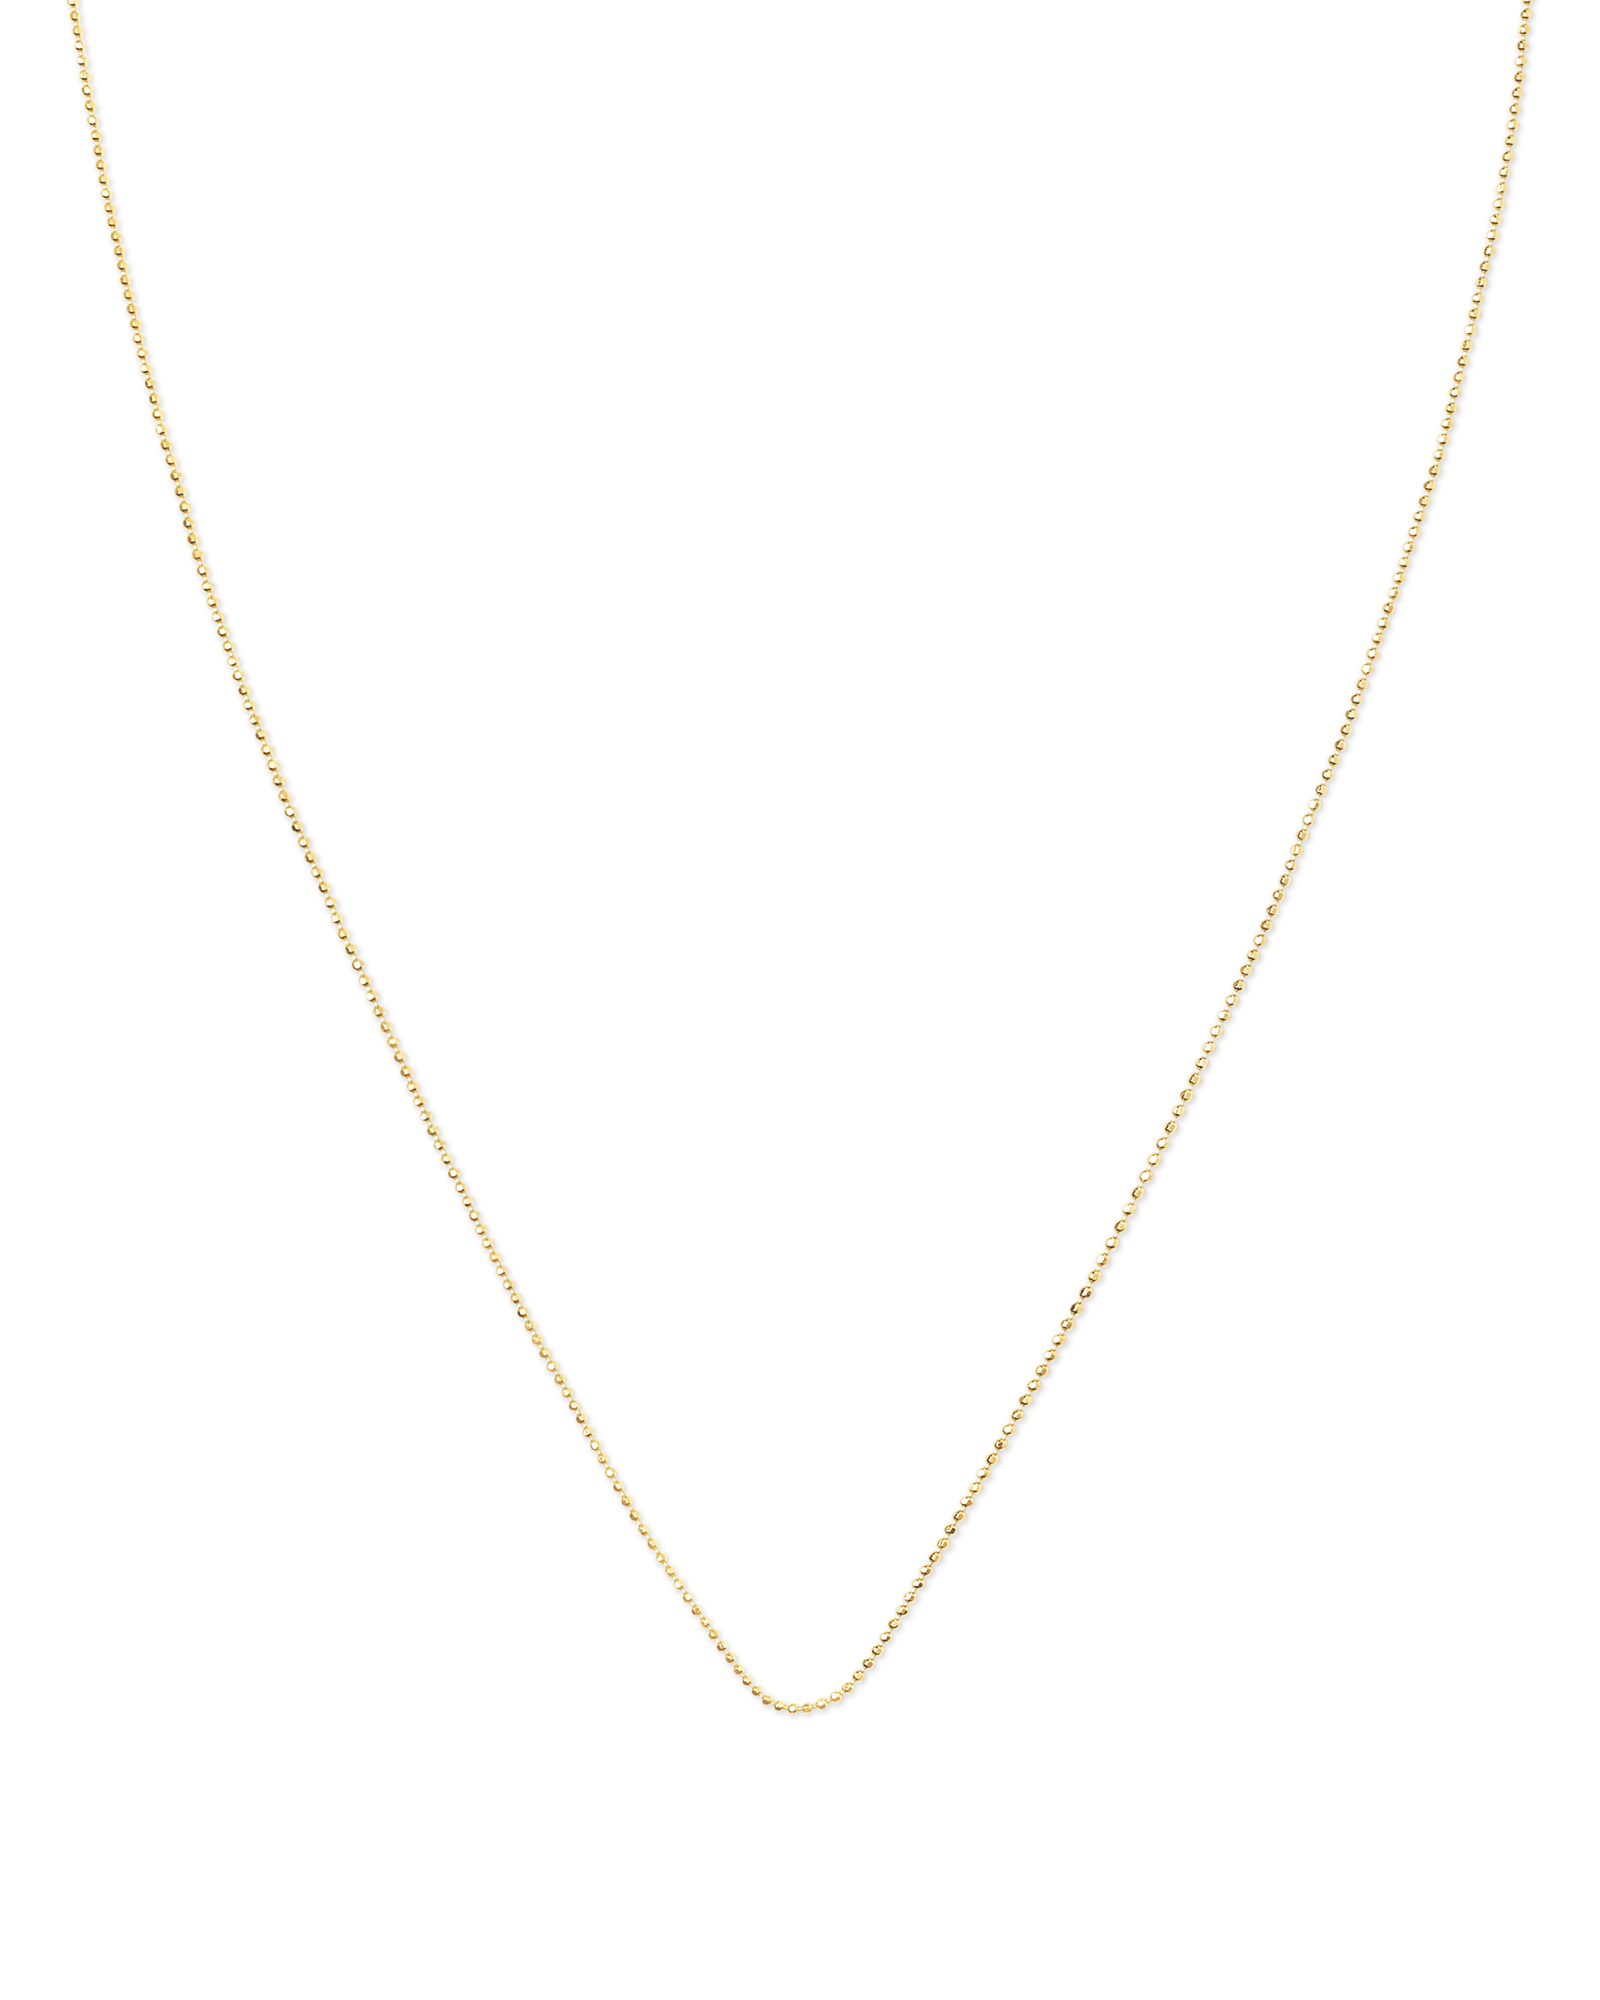 22 Inch Ball Chain Necklace in 18k Gold Vermeil | Kendra Scott